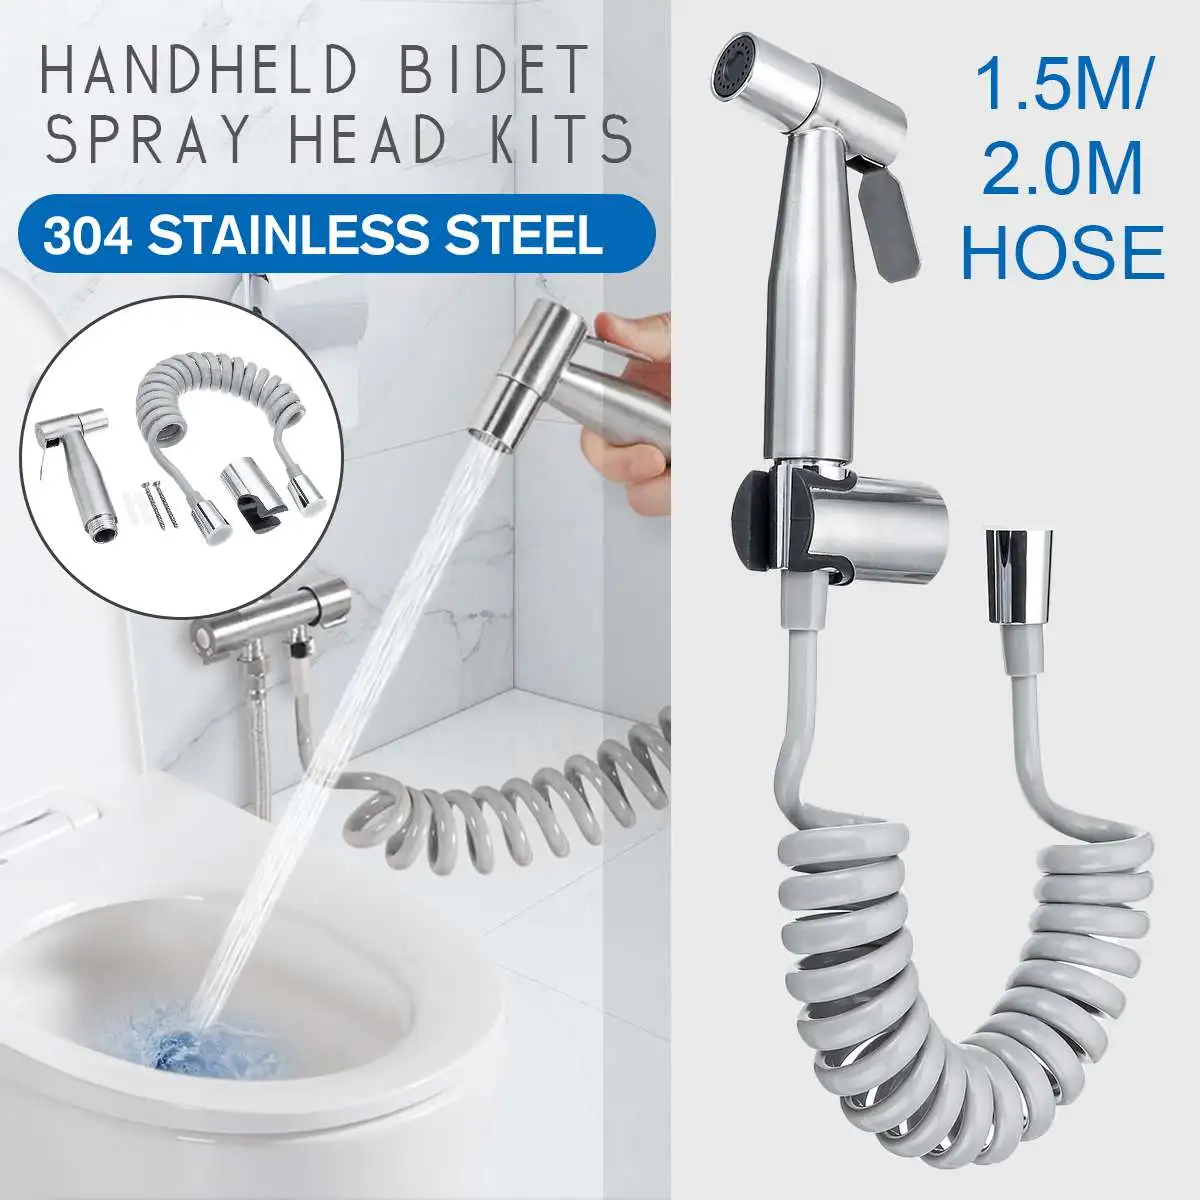 Stainless Steel Handheld Bidet Spray Shower Head Toilet Shattaf Hose Bathroom US 